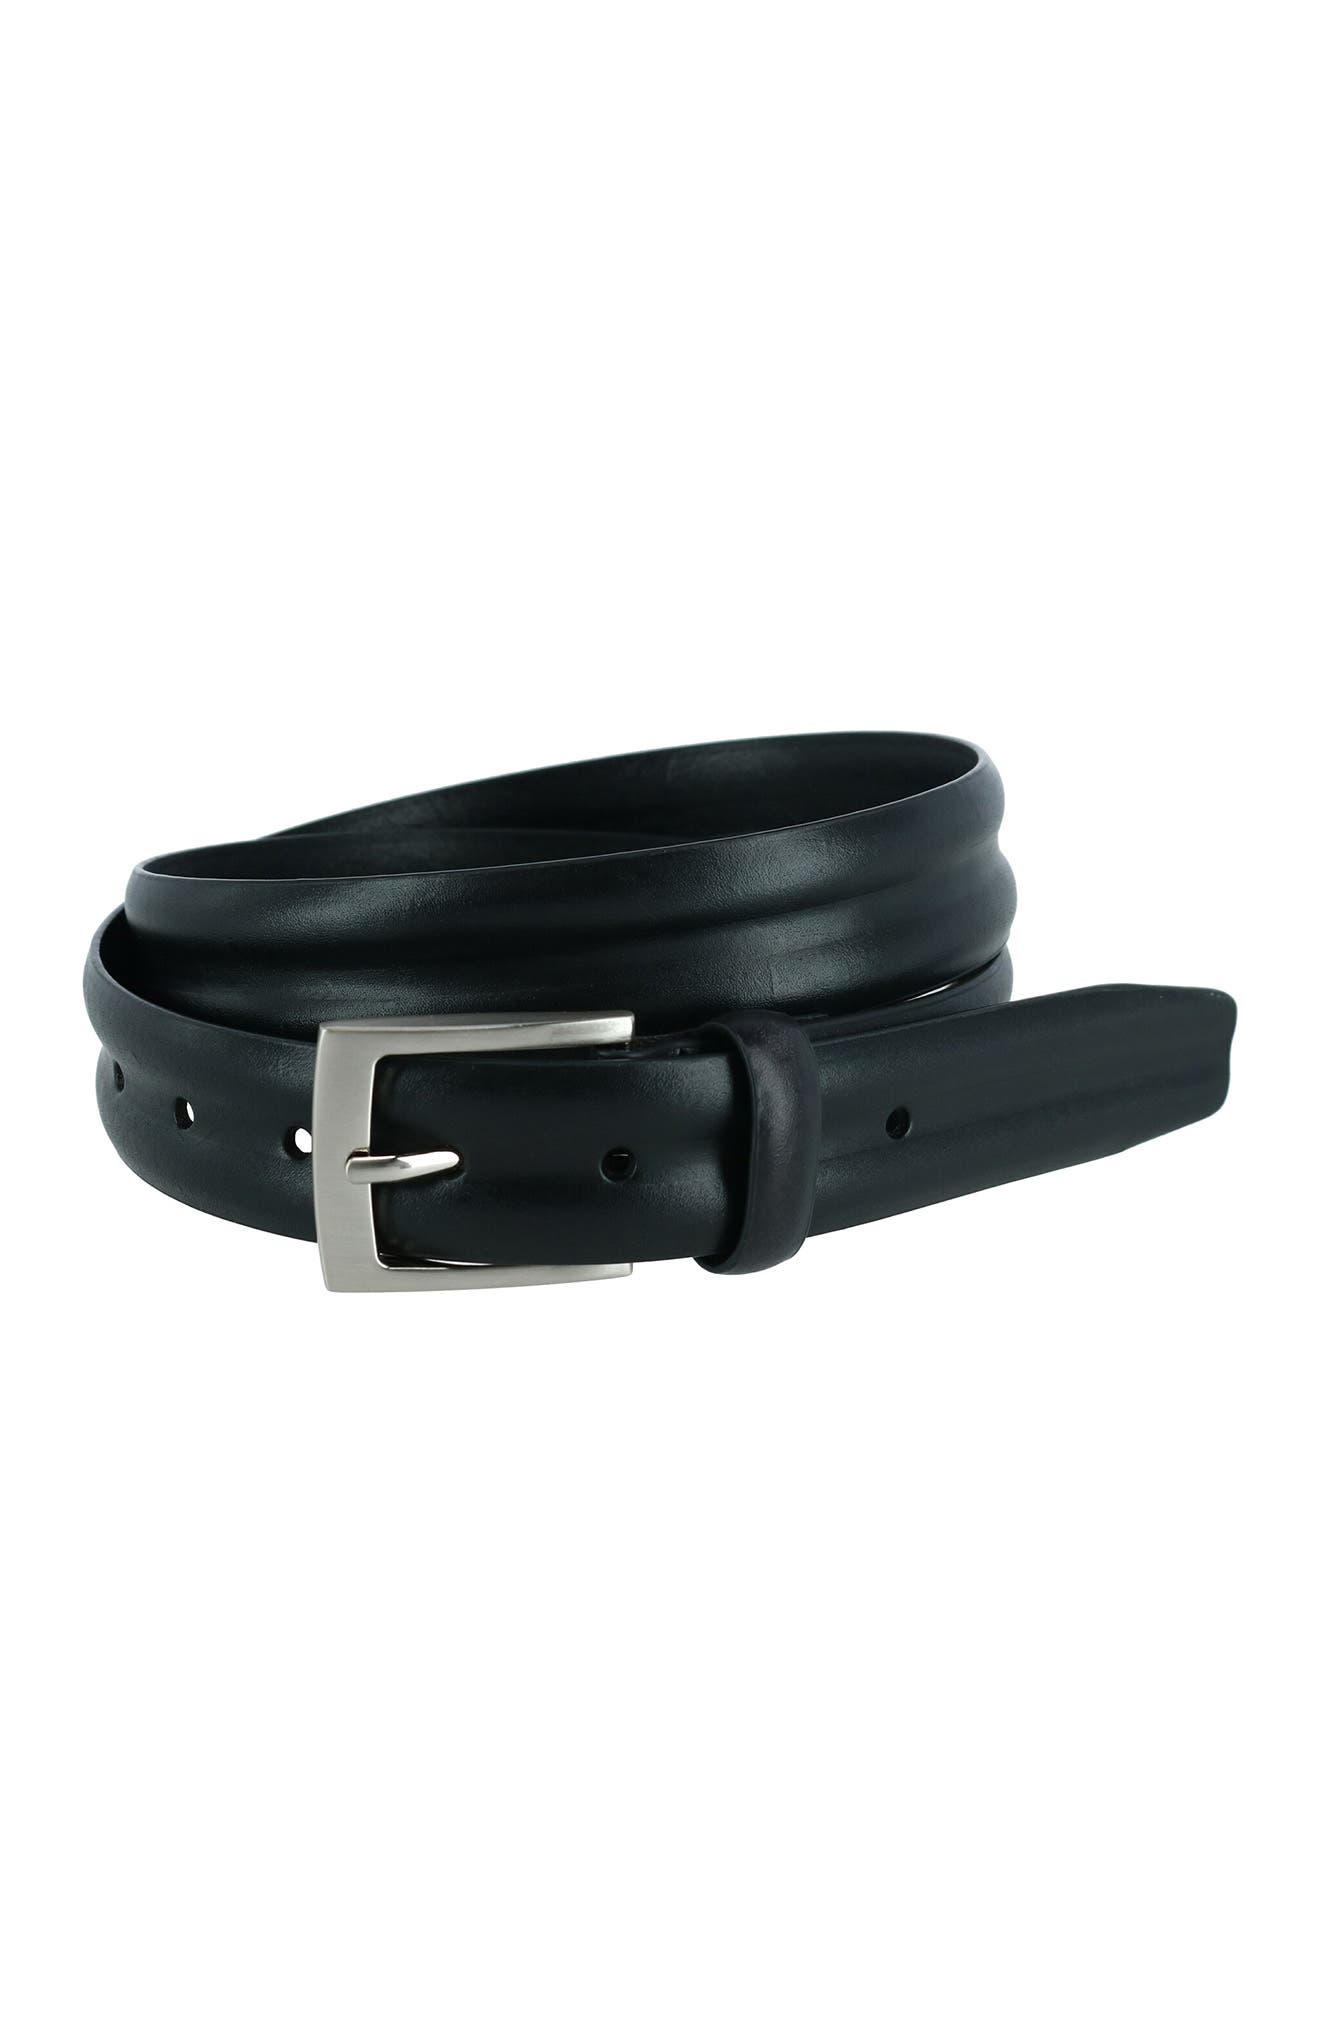 Phenix 35mm Center Heat Crease Leather Belt In Black